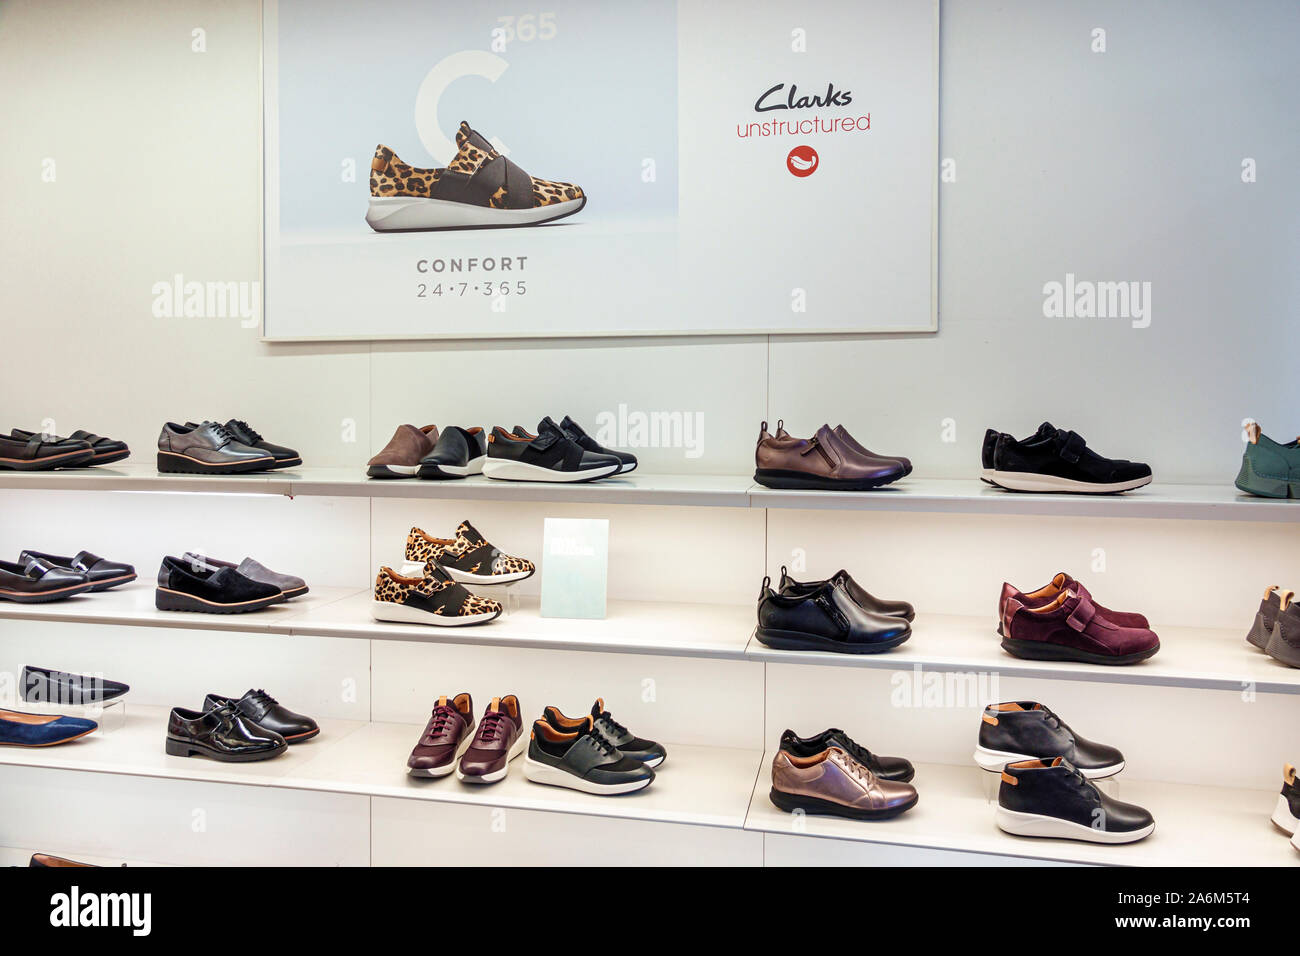 clarks shoe shop exeter